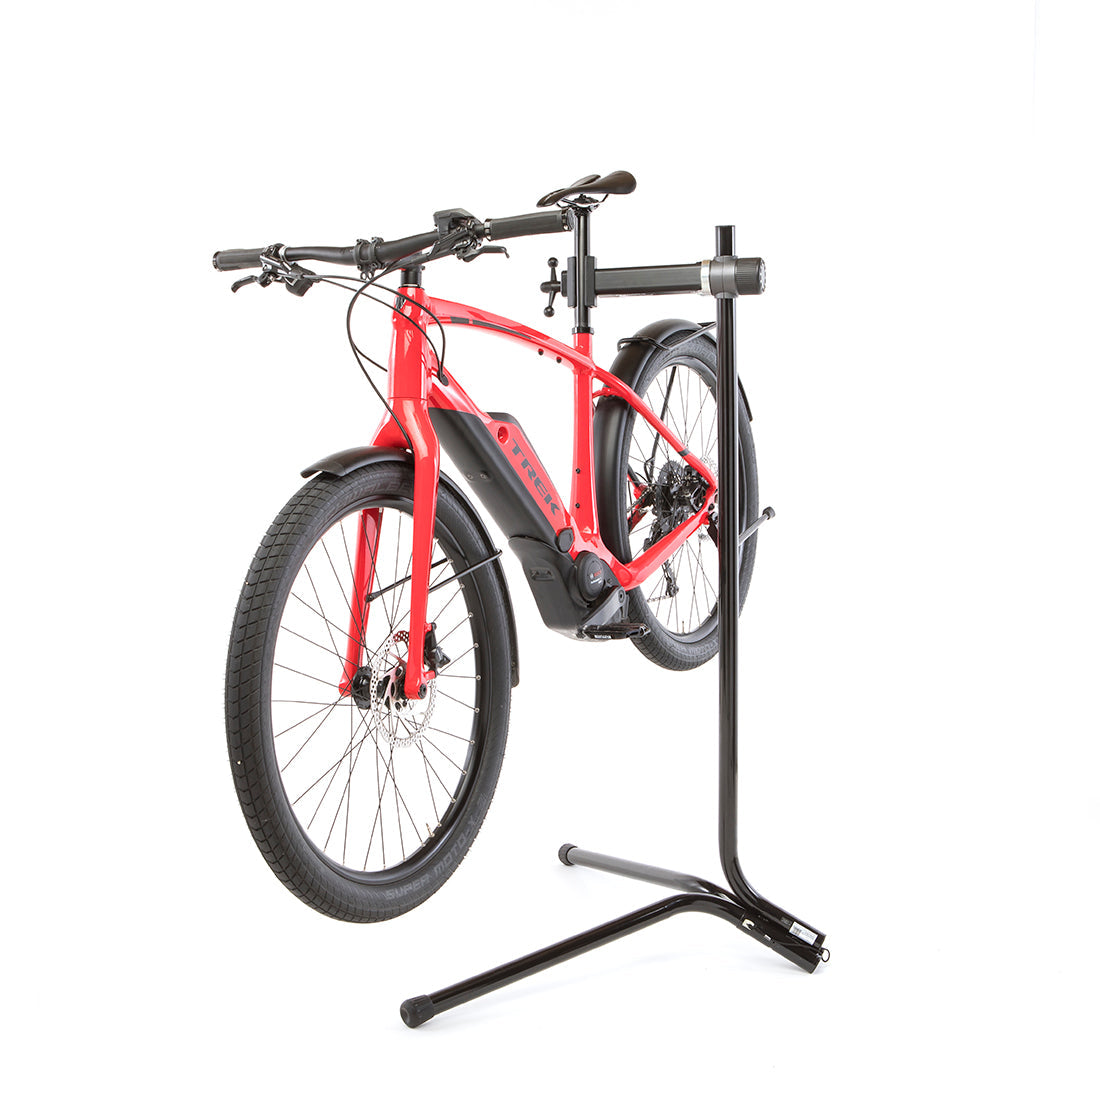 Feedback Sports Recreational bike repair stand with urban bike mounted on white background.